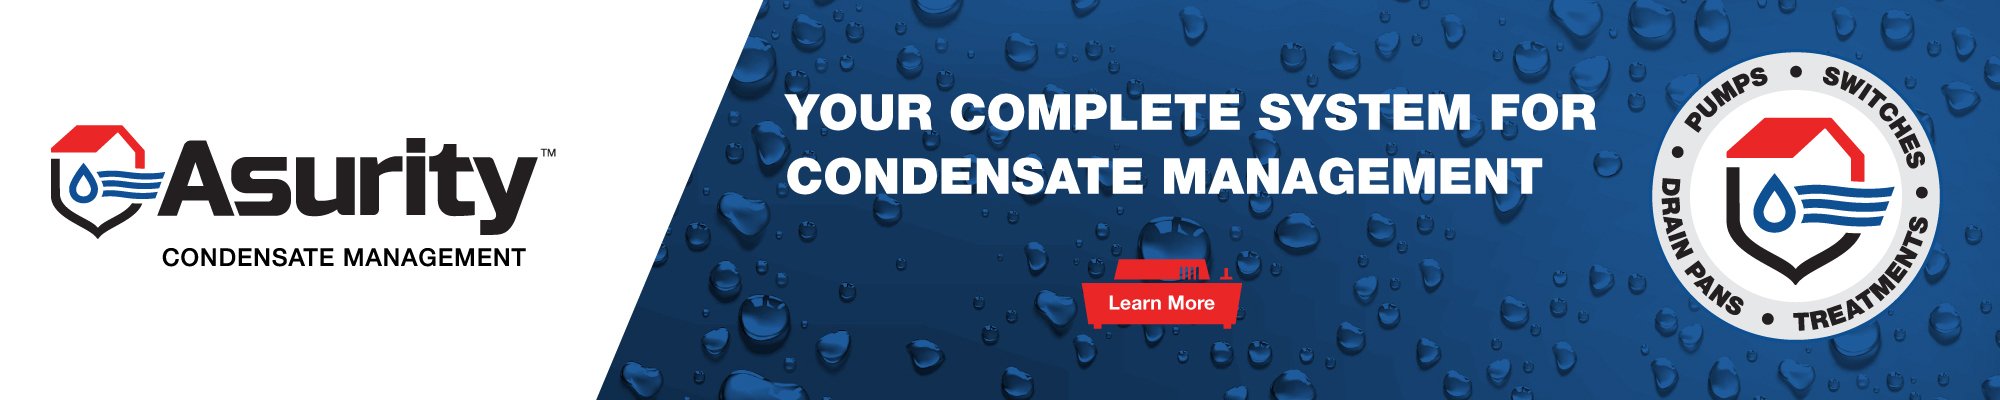 Asurity Condensate Management